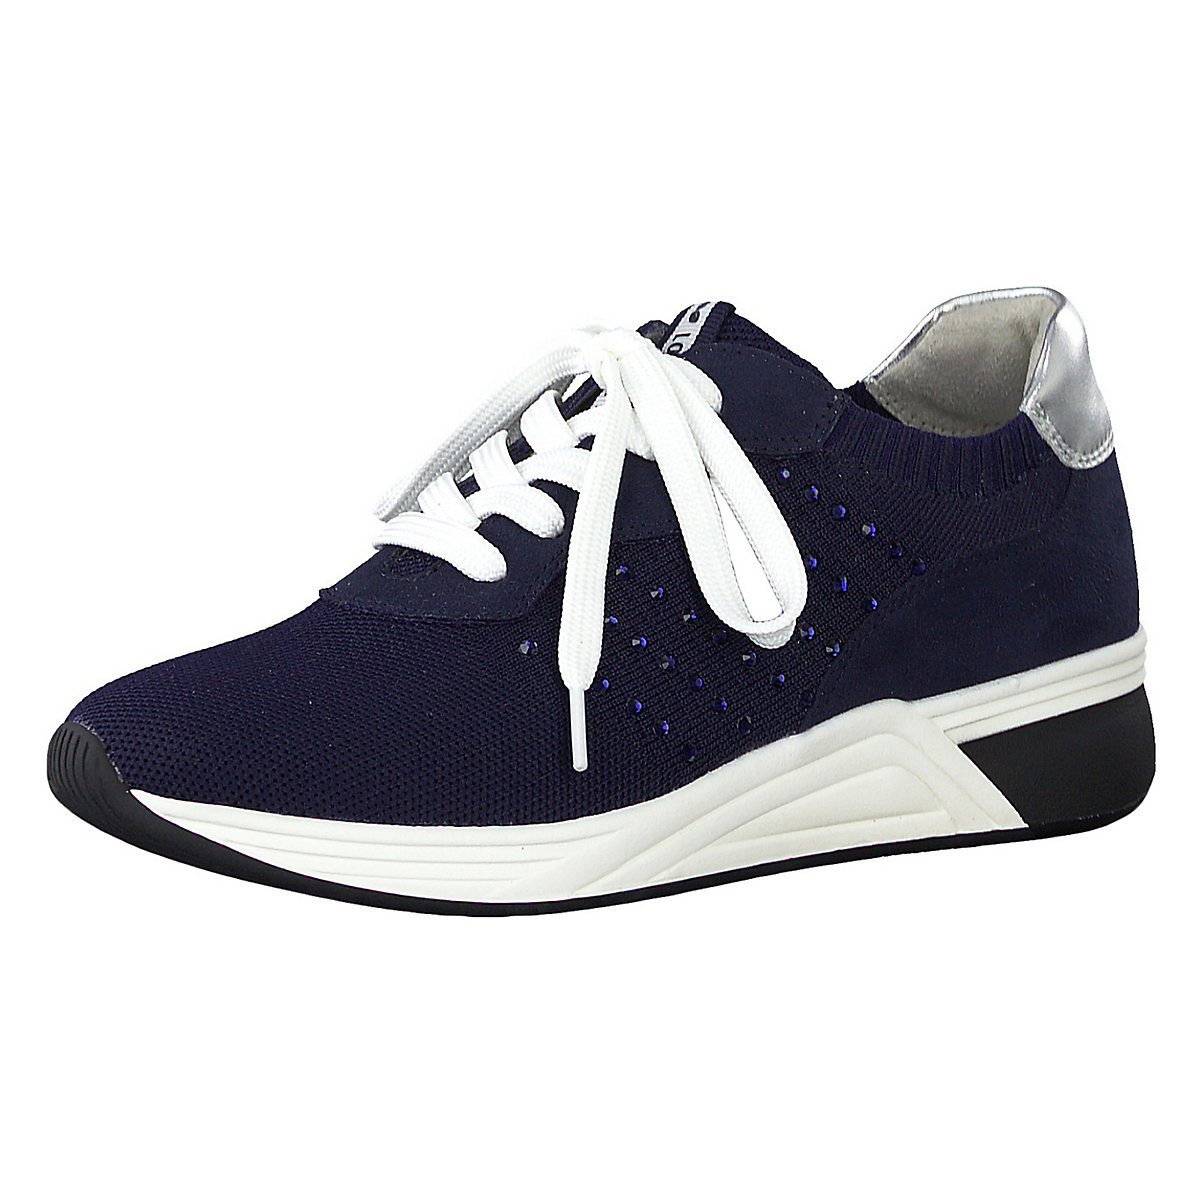 MARCO TOZZI Damen Sneaker Low Top Blau Navy Comb Vegan 2-2-23784-24 890 Sneakers Low blau